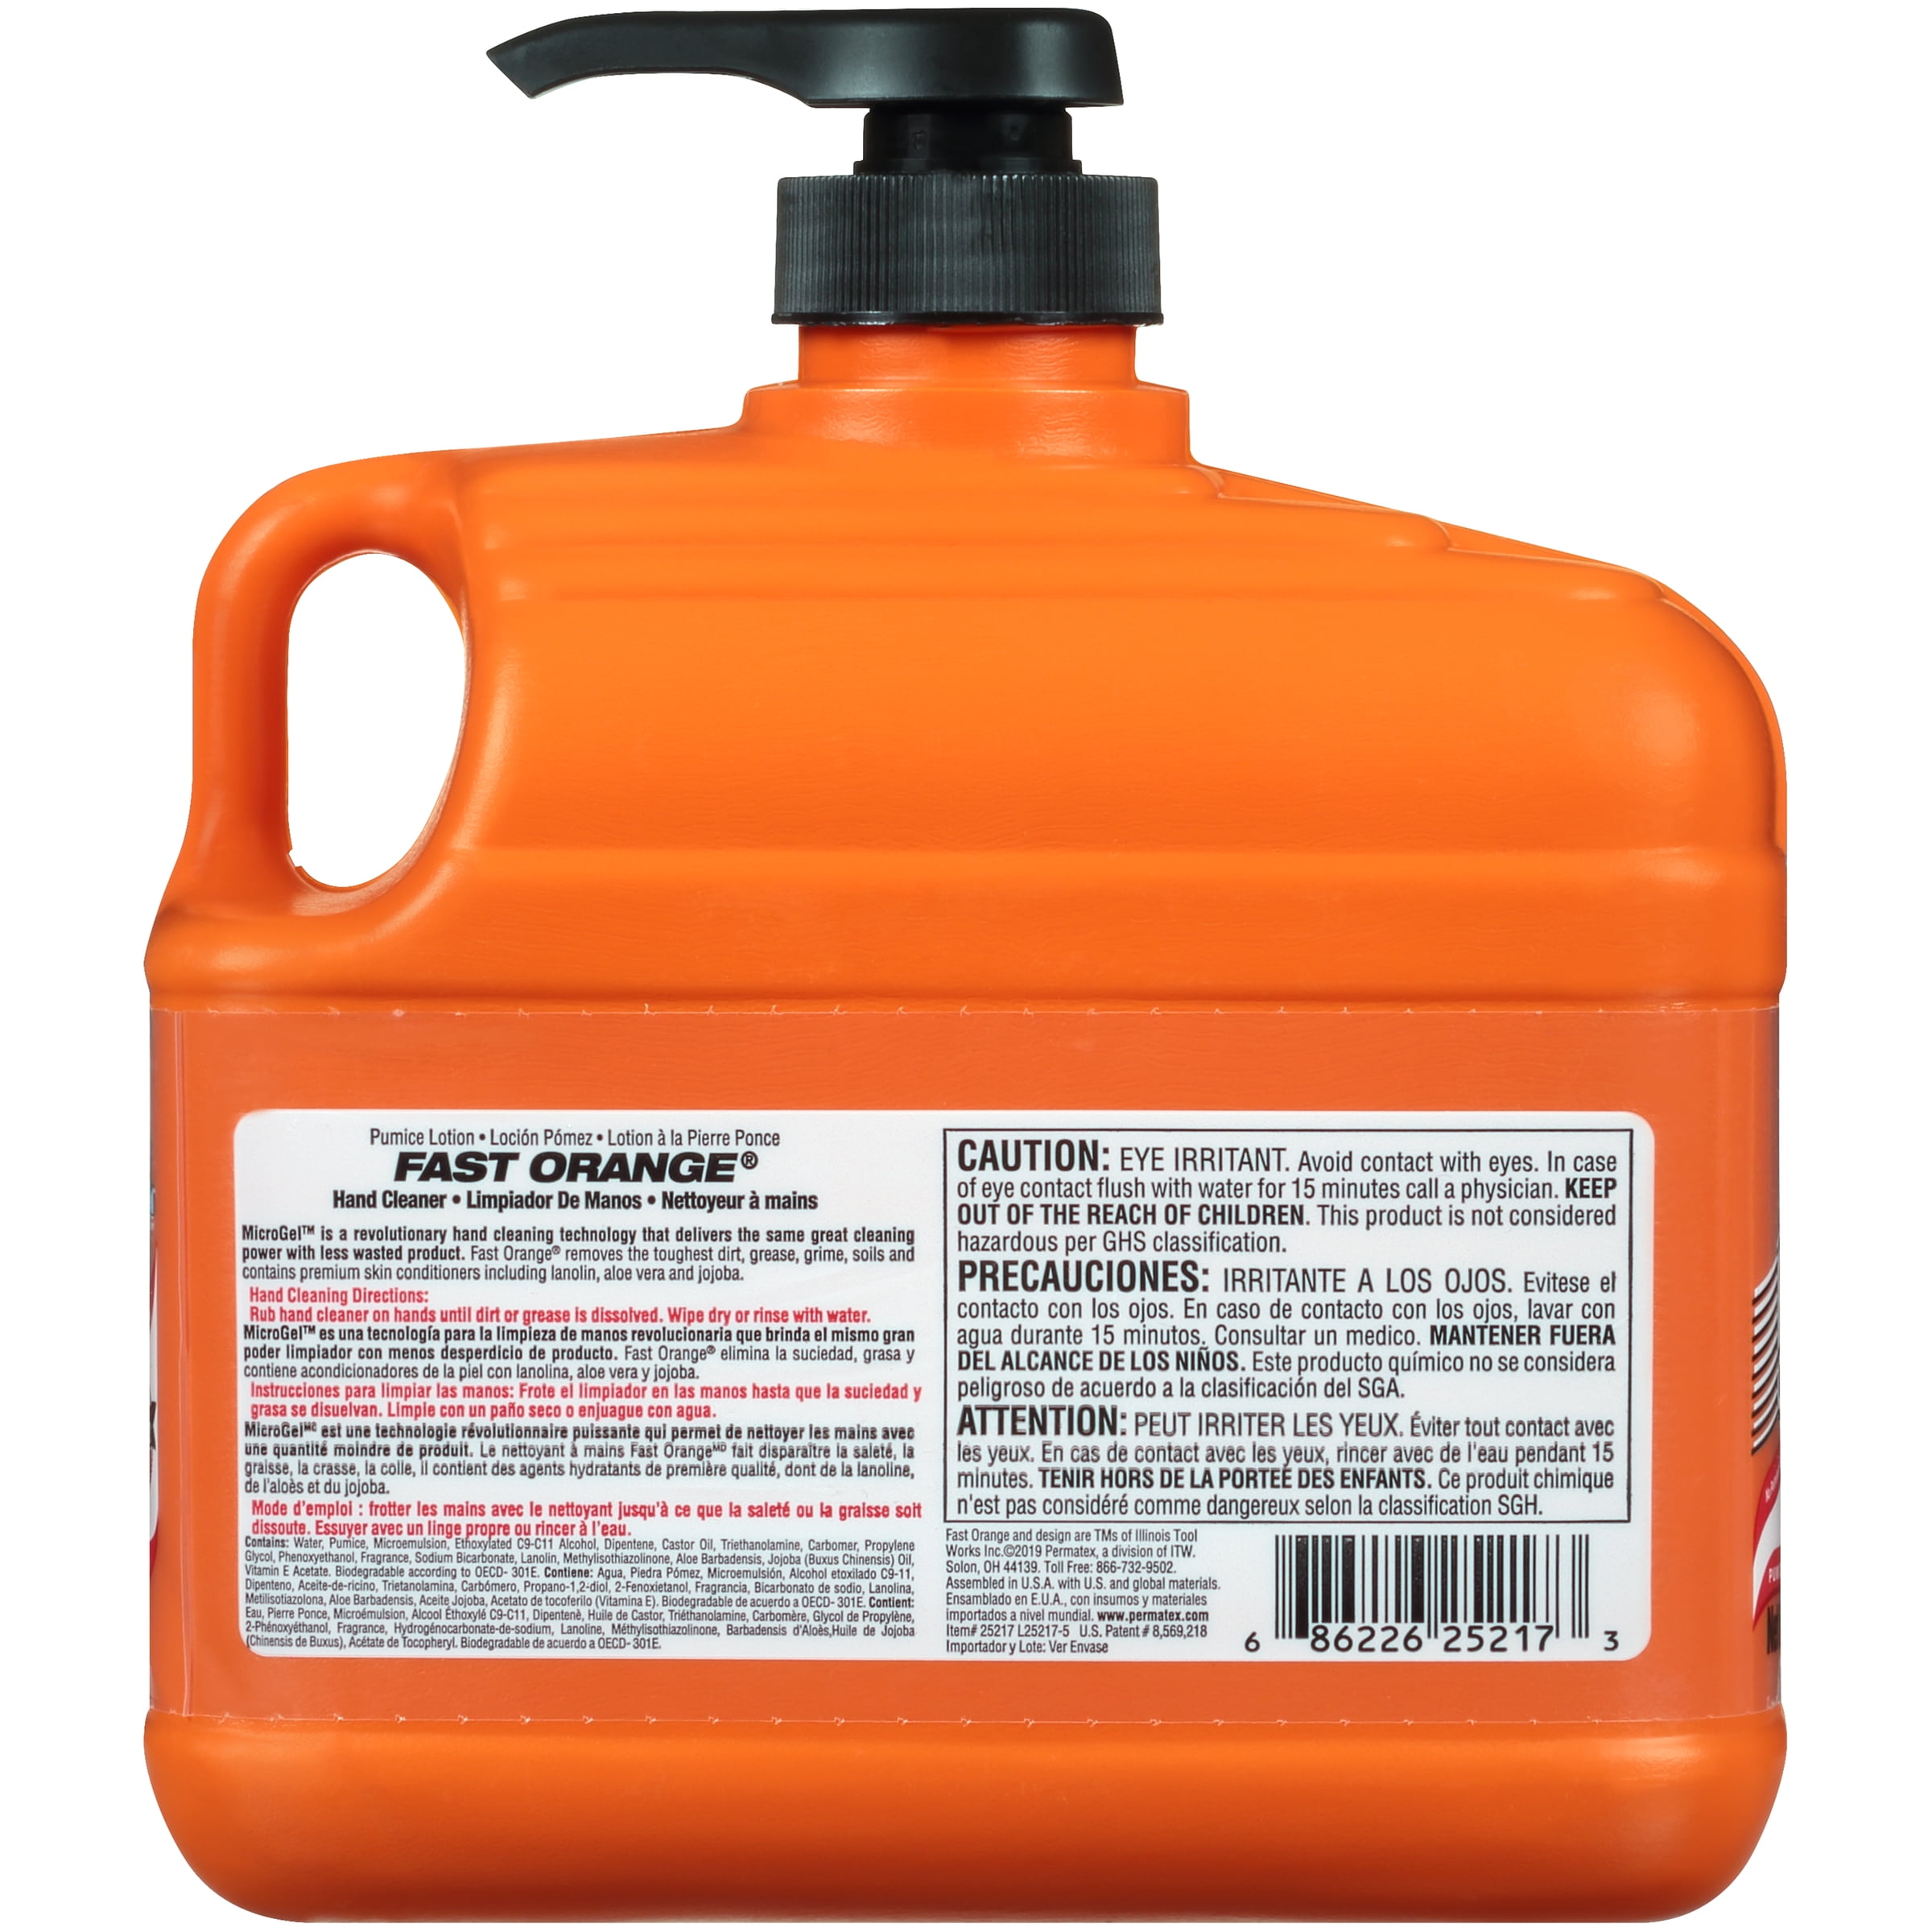 23-122 Fast Orange Hand Cleaner - 15 oz Squeeze Bottle, 23-122 Fast Orange  Hand Cleaner - 15 oz Squeeze Bottle